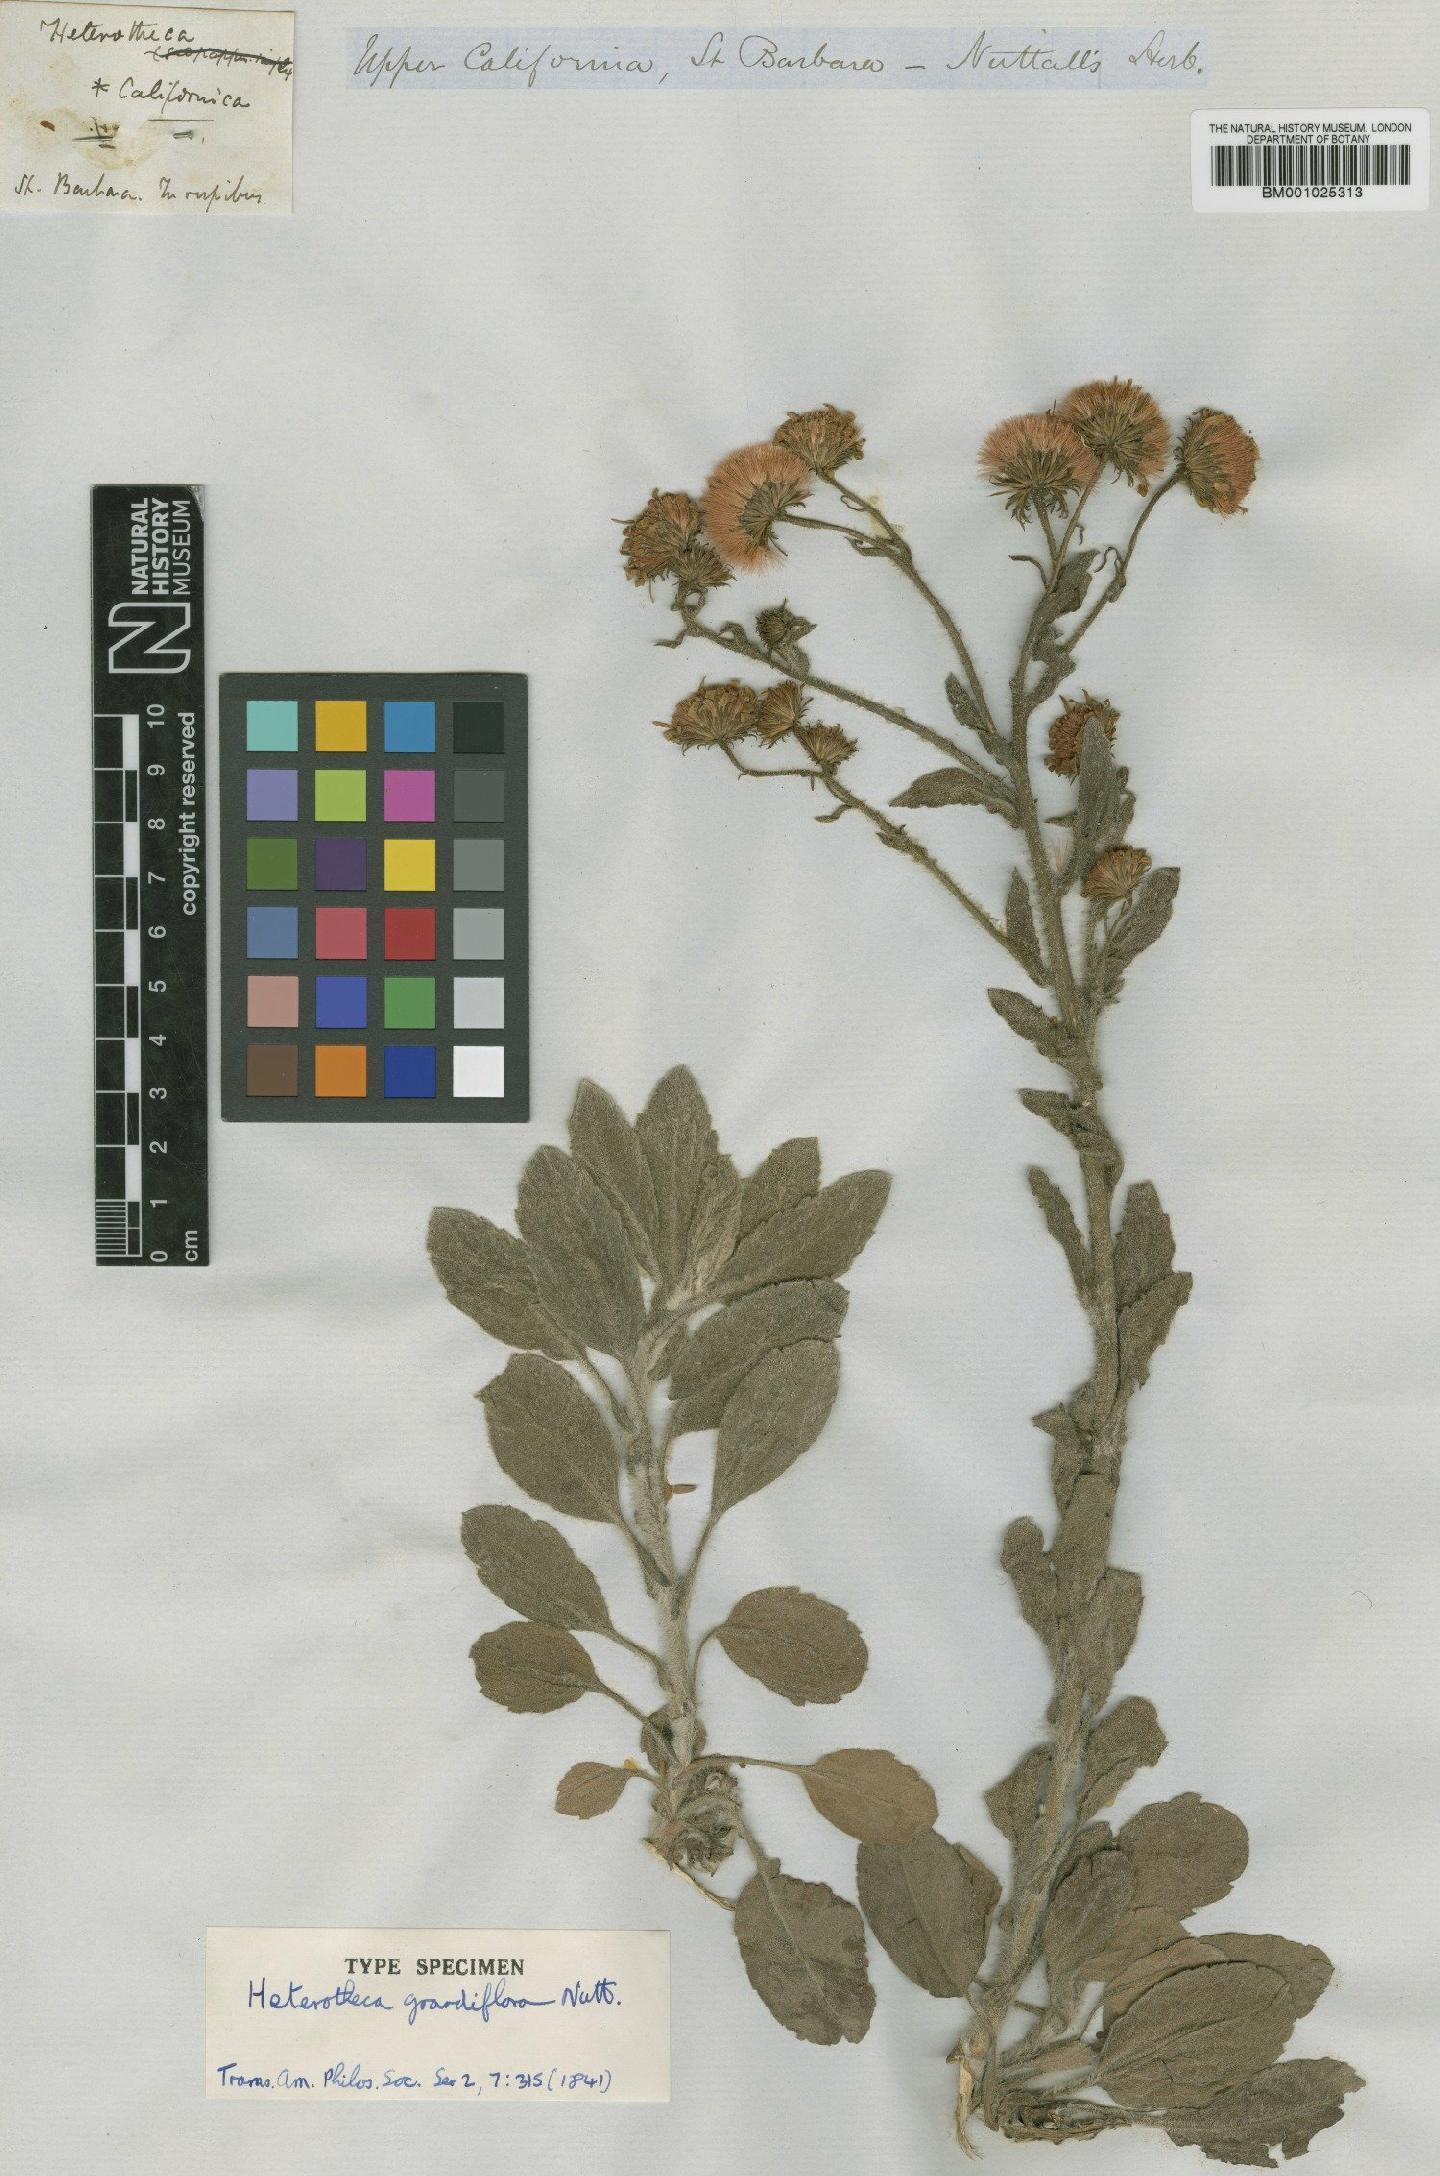 To NHMUK collection (Heterotheca grandiflora Nutt.; Type; NHMUK:ecatalogue:745819)